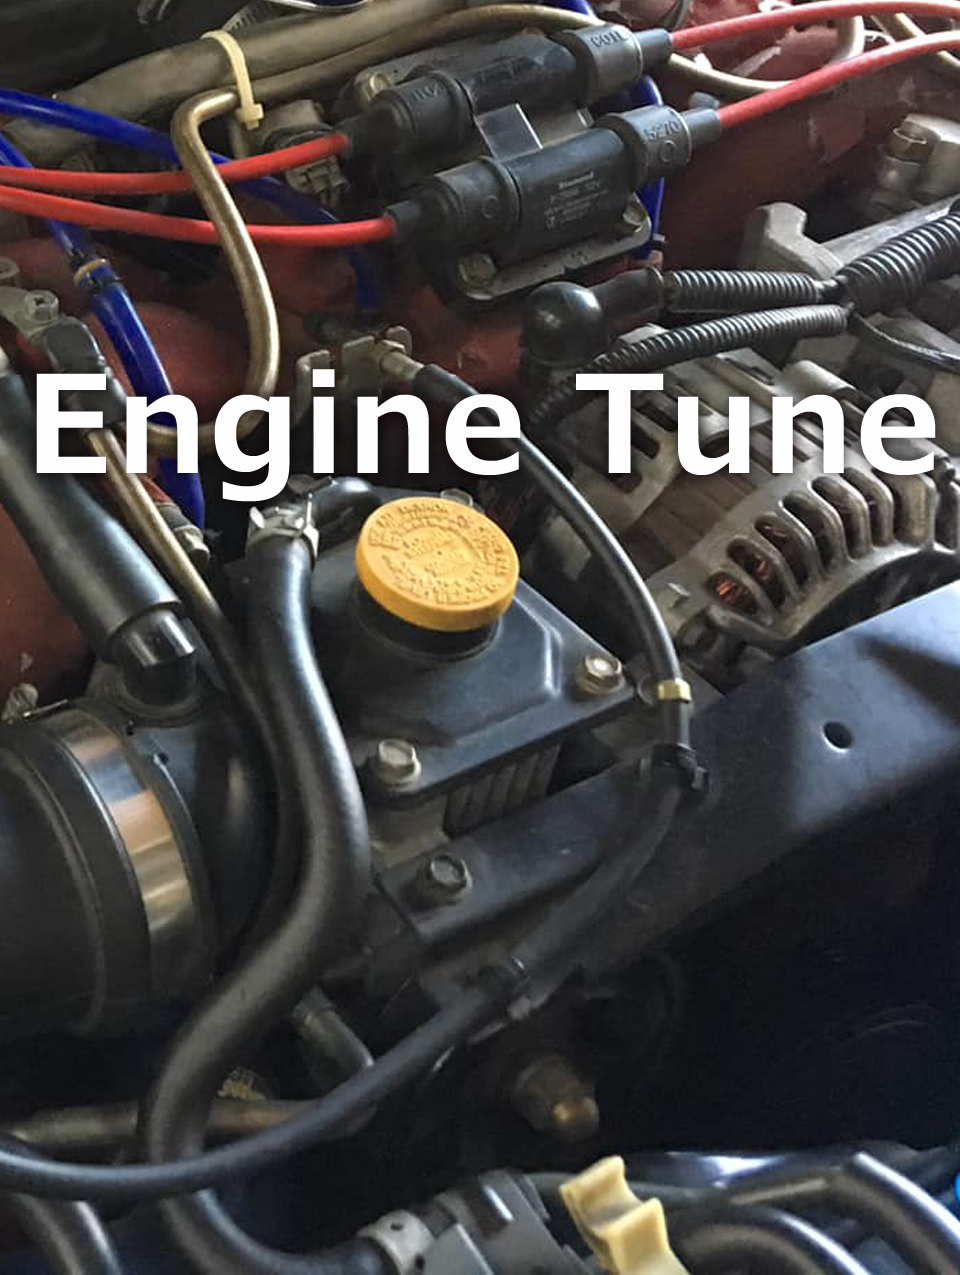 Engine tune